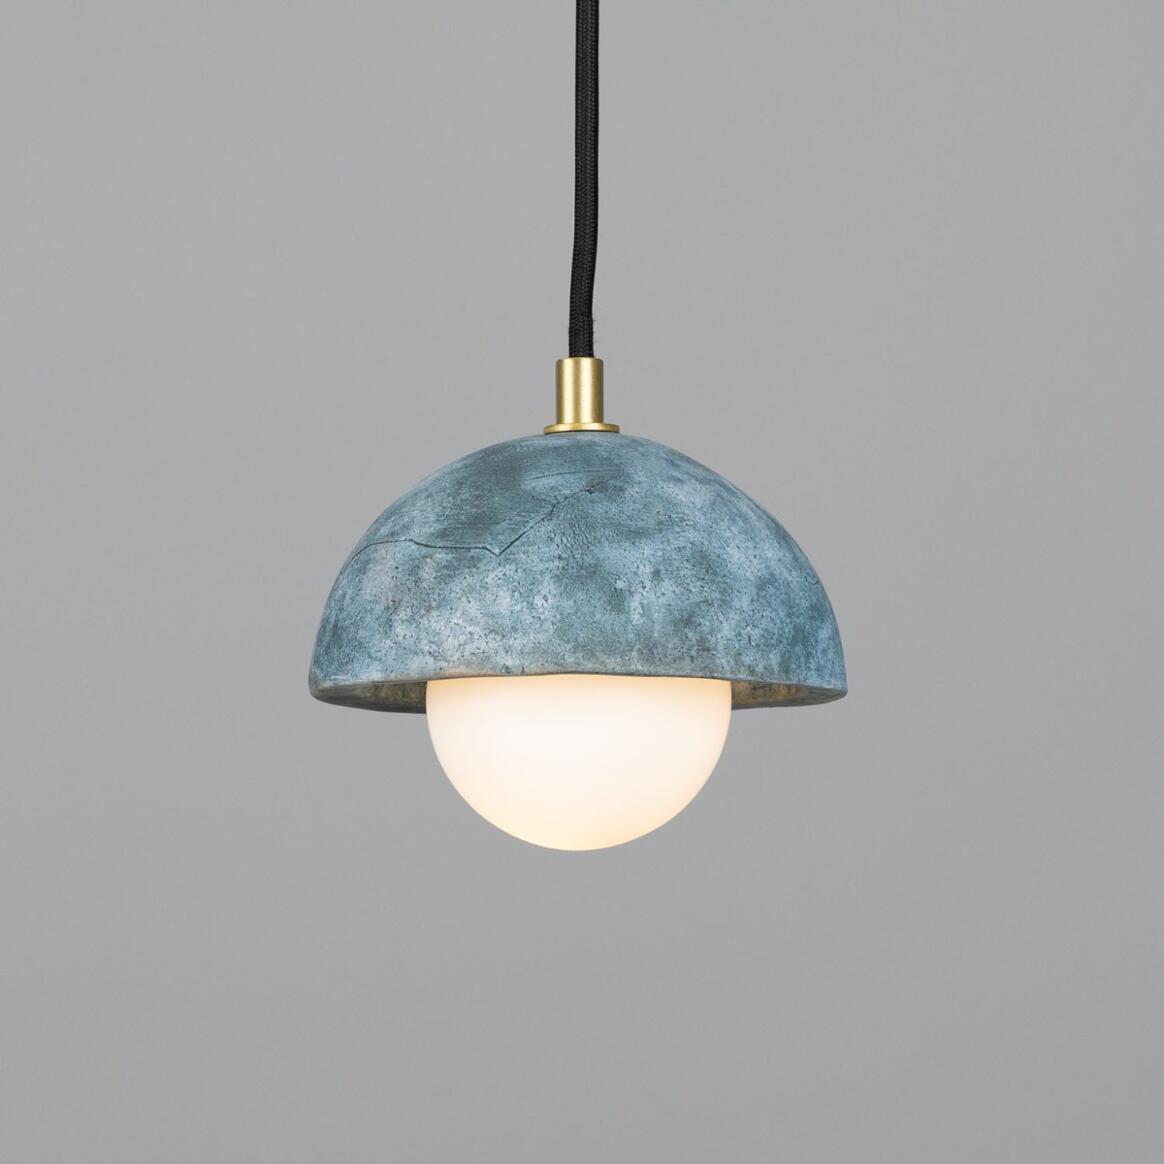 Ferox Small Ceramic Dome Pendant Light 5.5", Blue Earth main product image